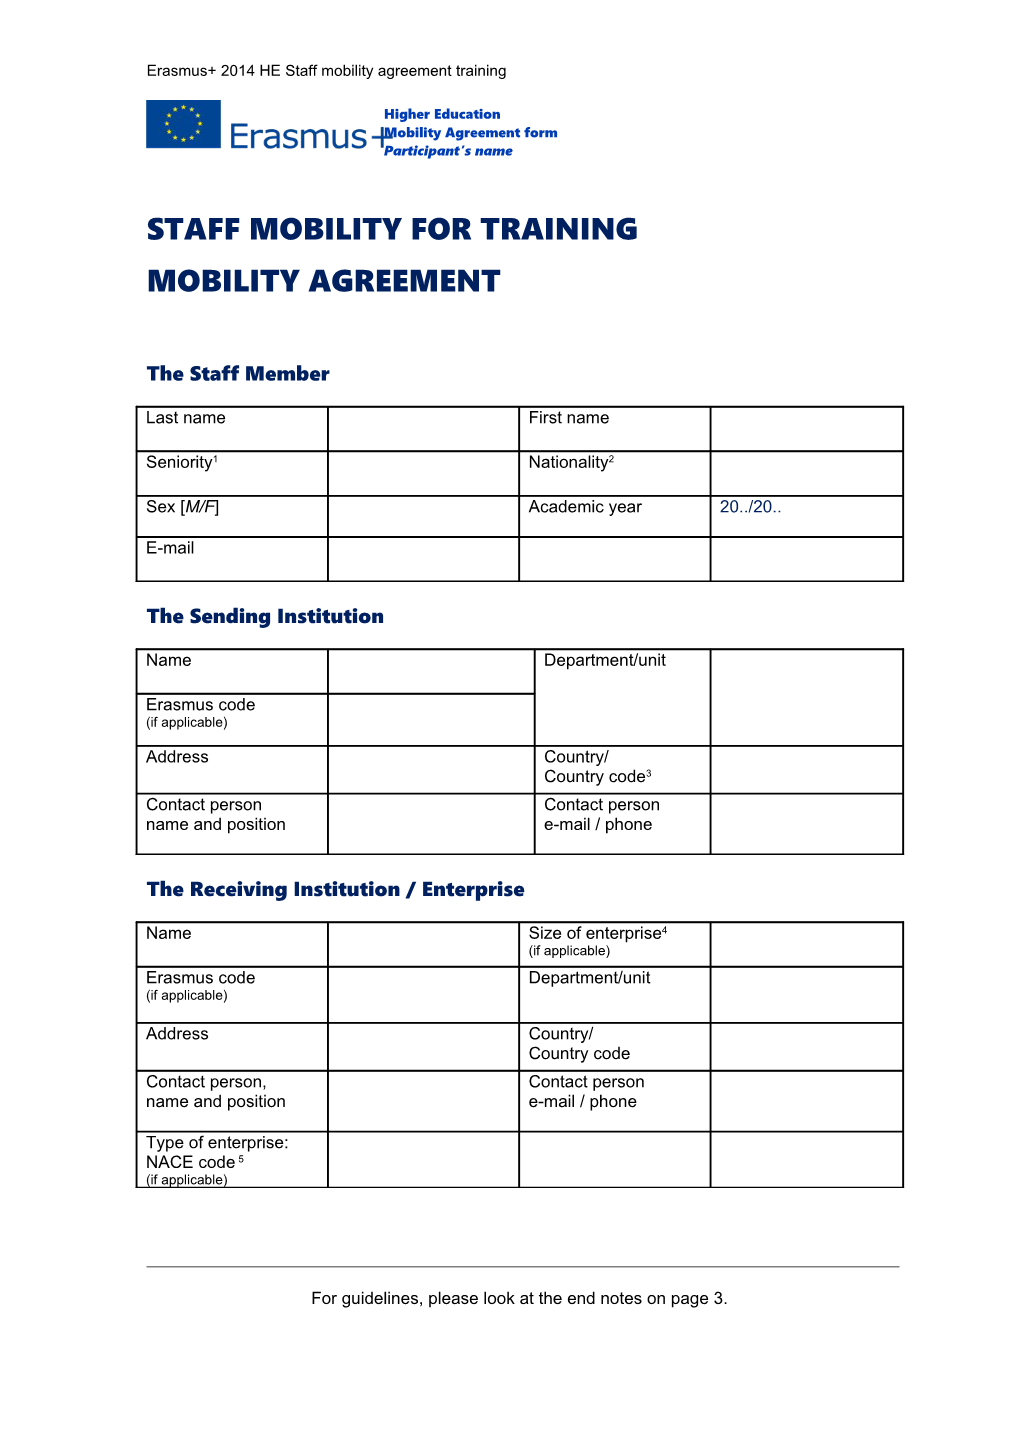 Erasmus+ 2014 HE Staff Mobility Agreement Training